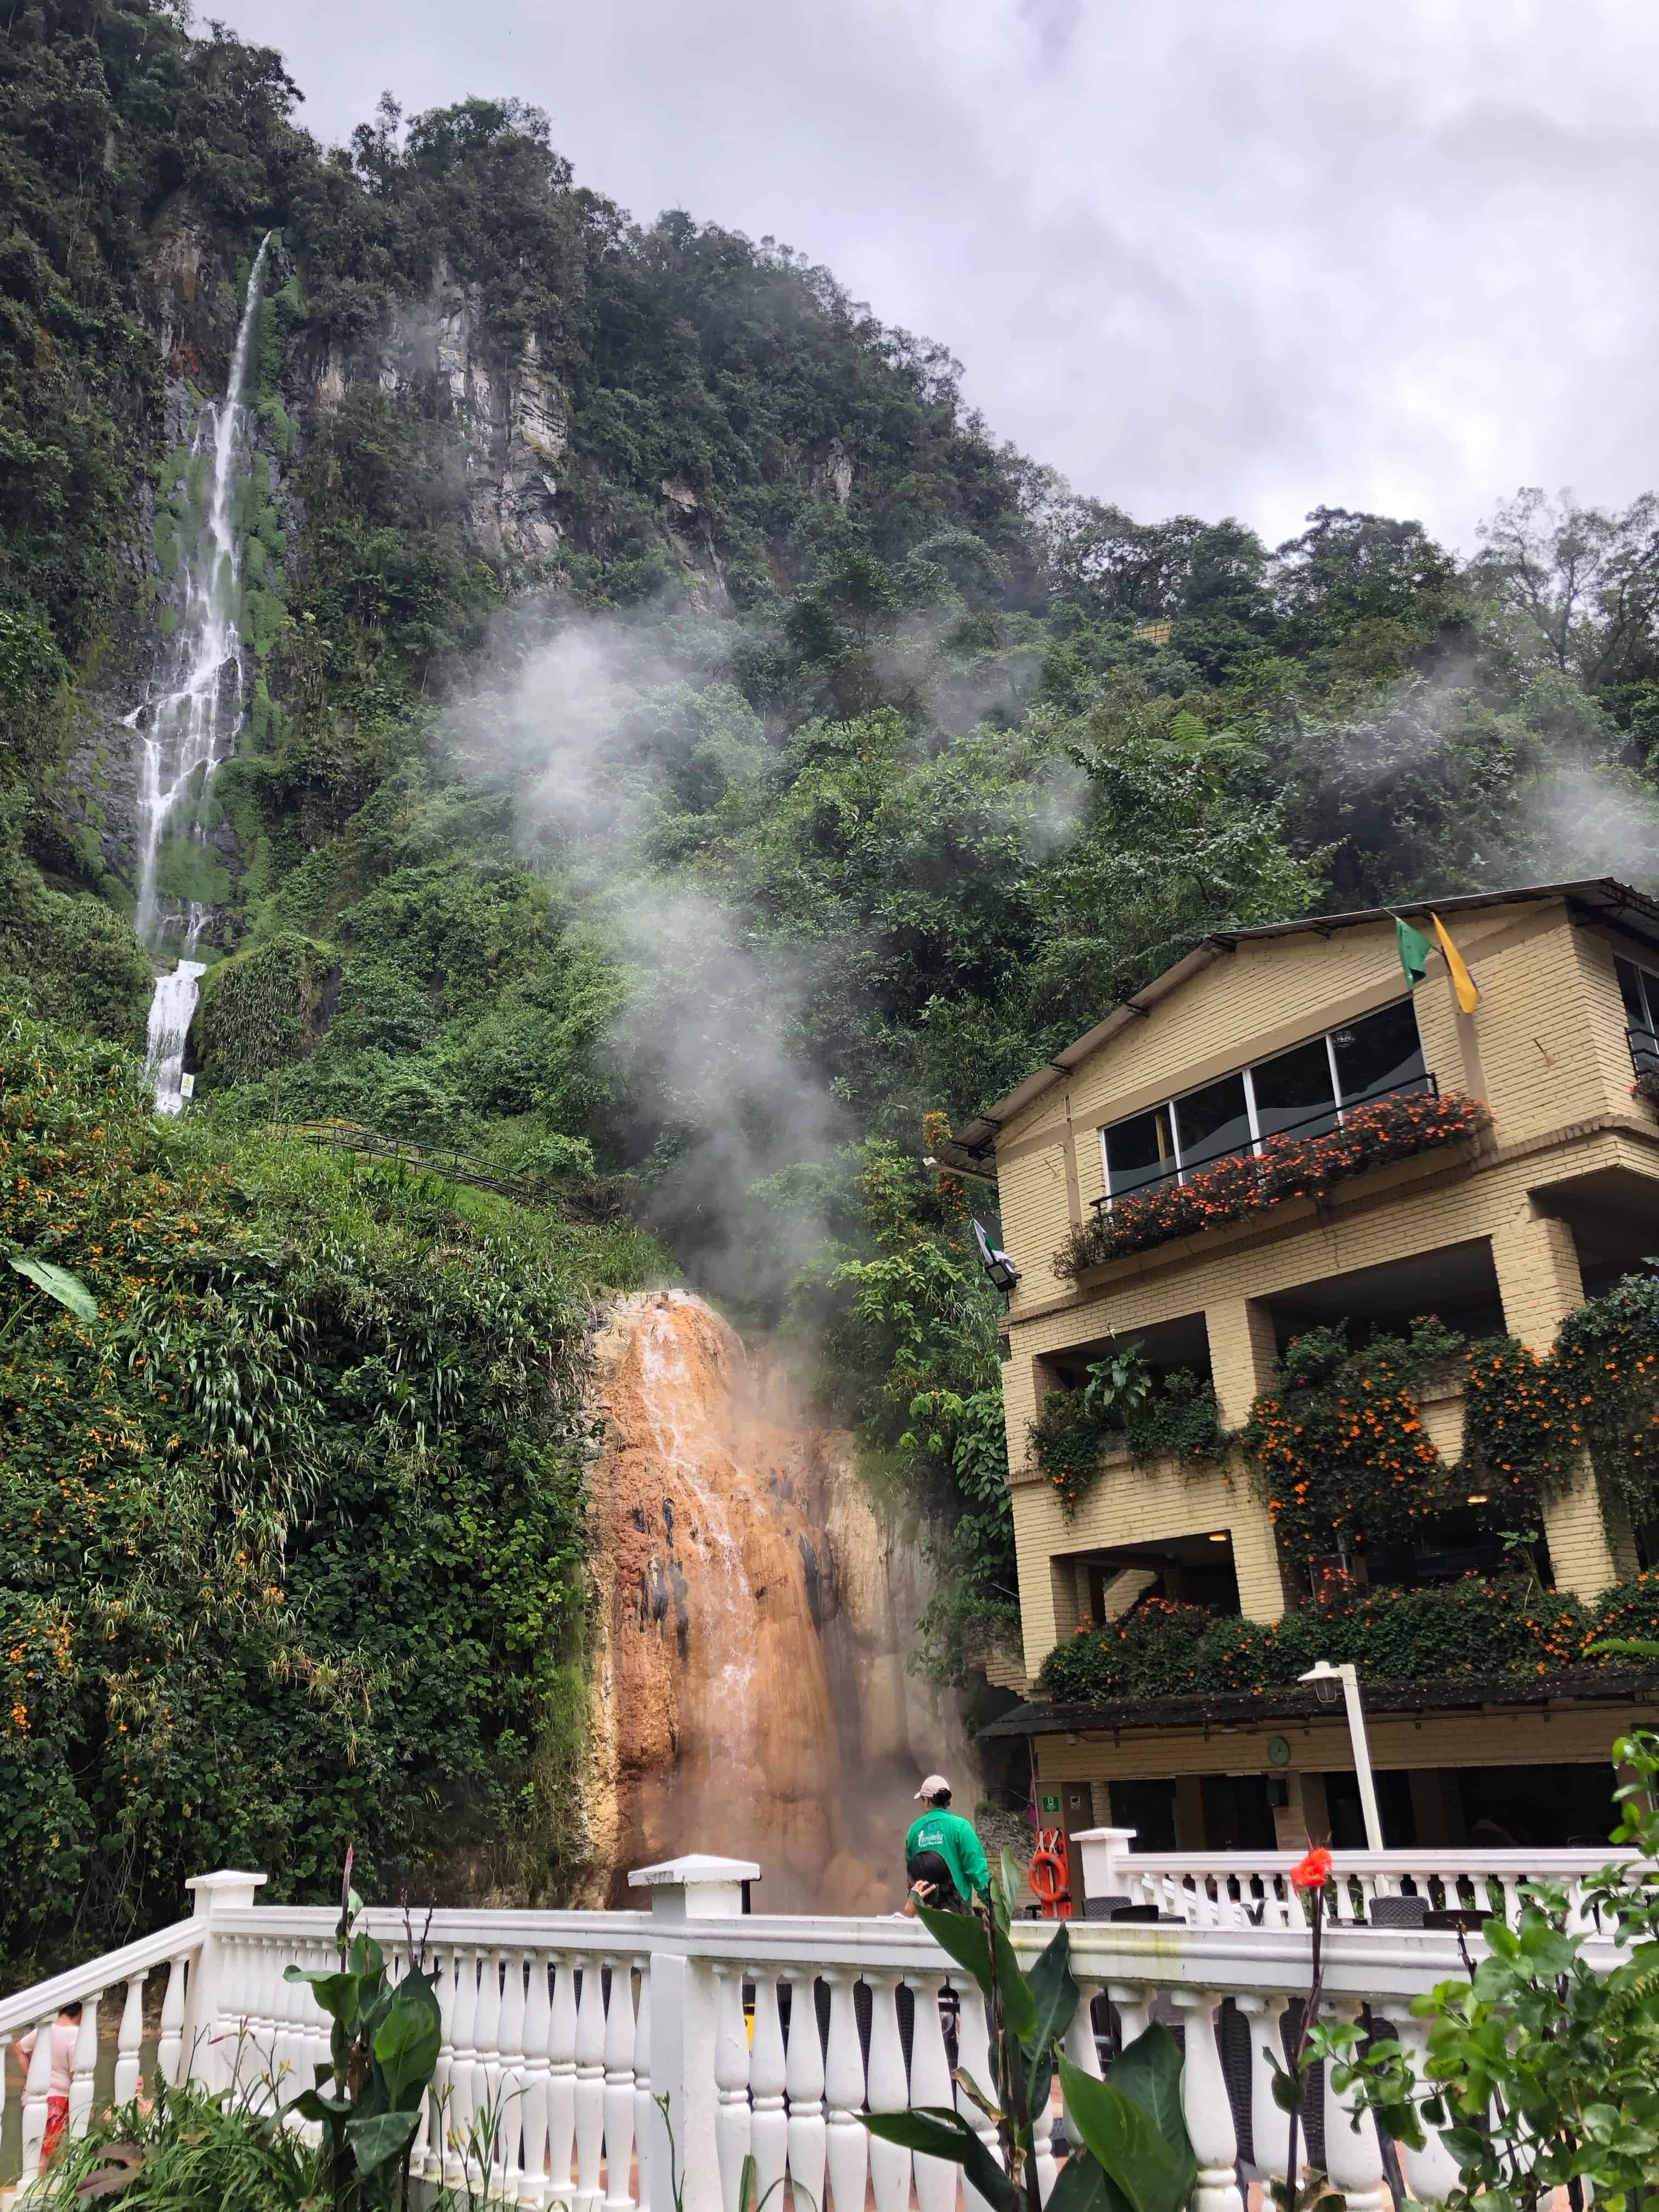 Looking up at the waterfall at Termales Hotel